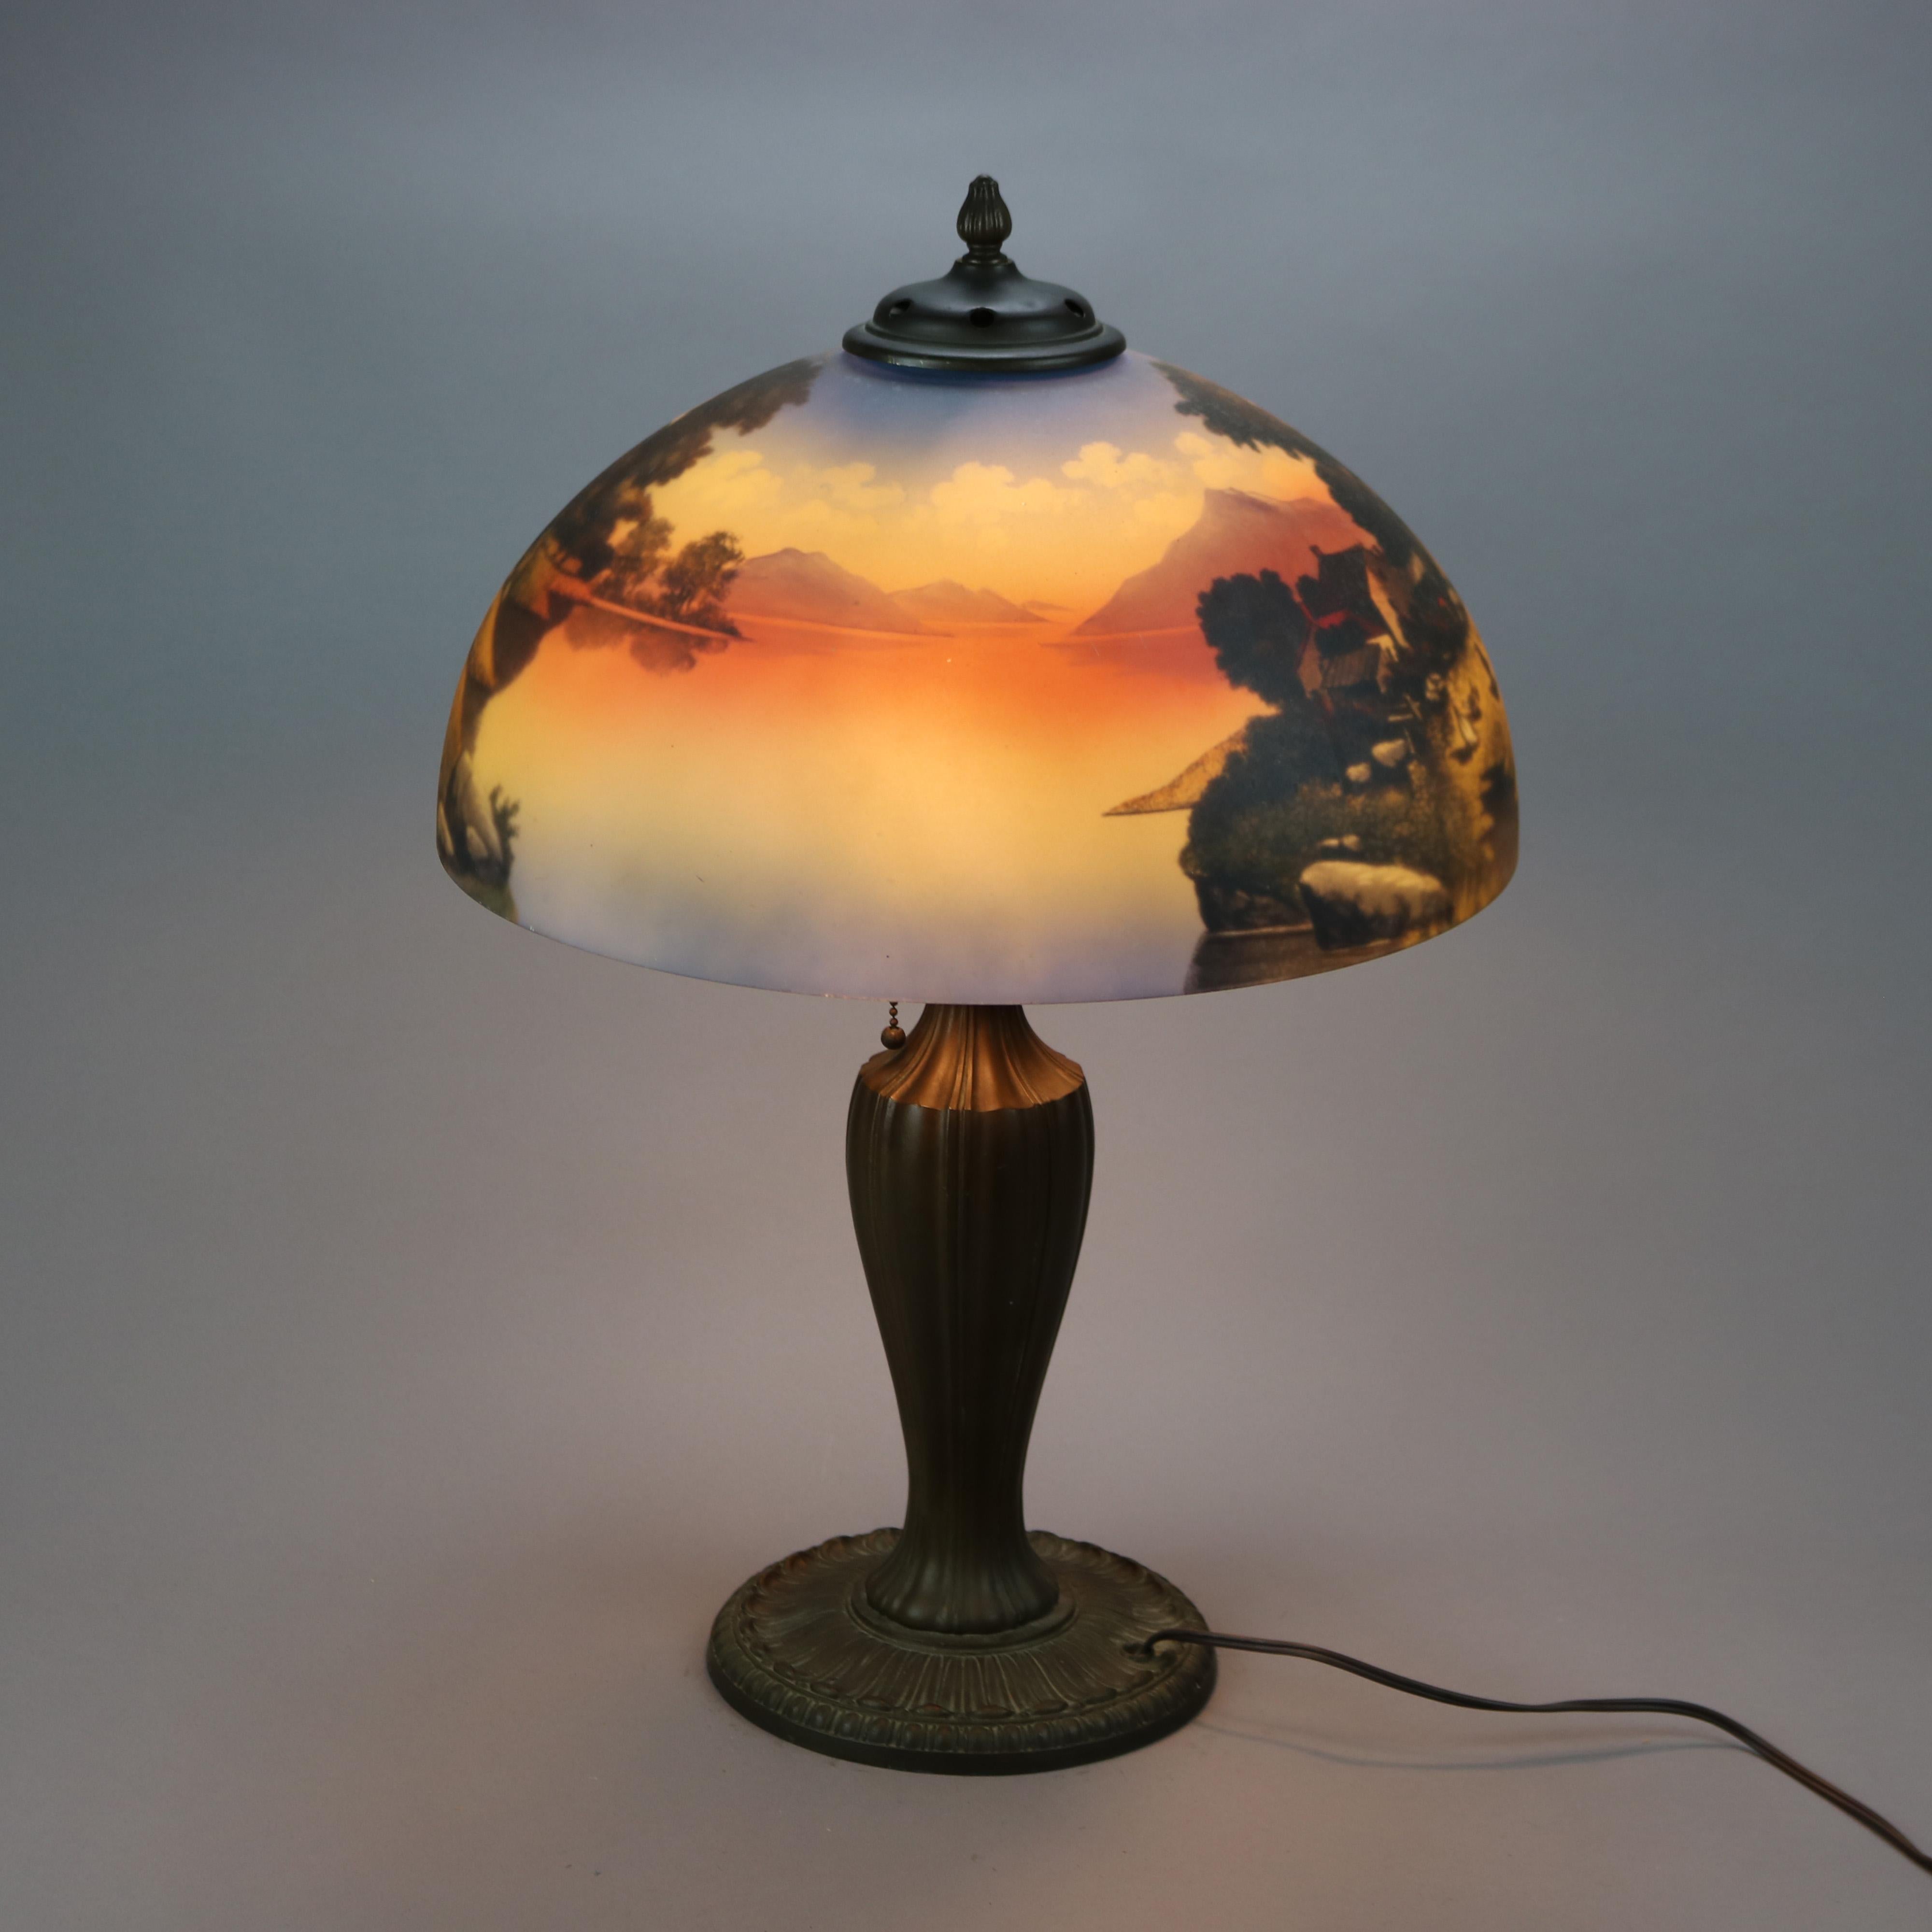 Cast Antique Arts & Crafts Phoenix Reverse Painted Lamp with Farm & Chickens, c1920